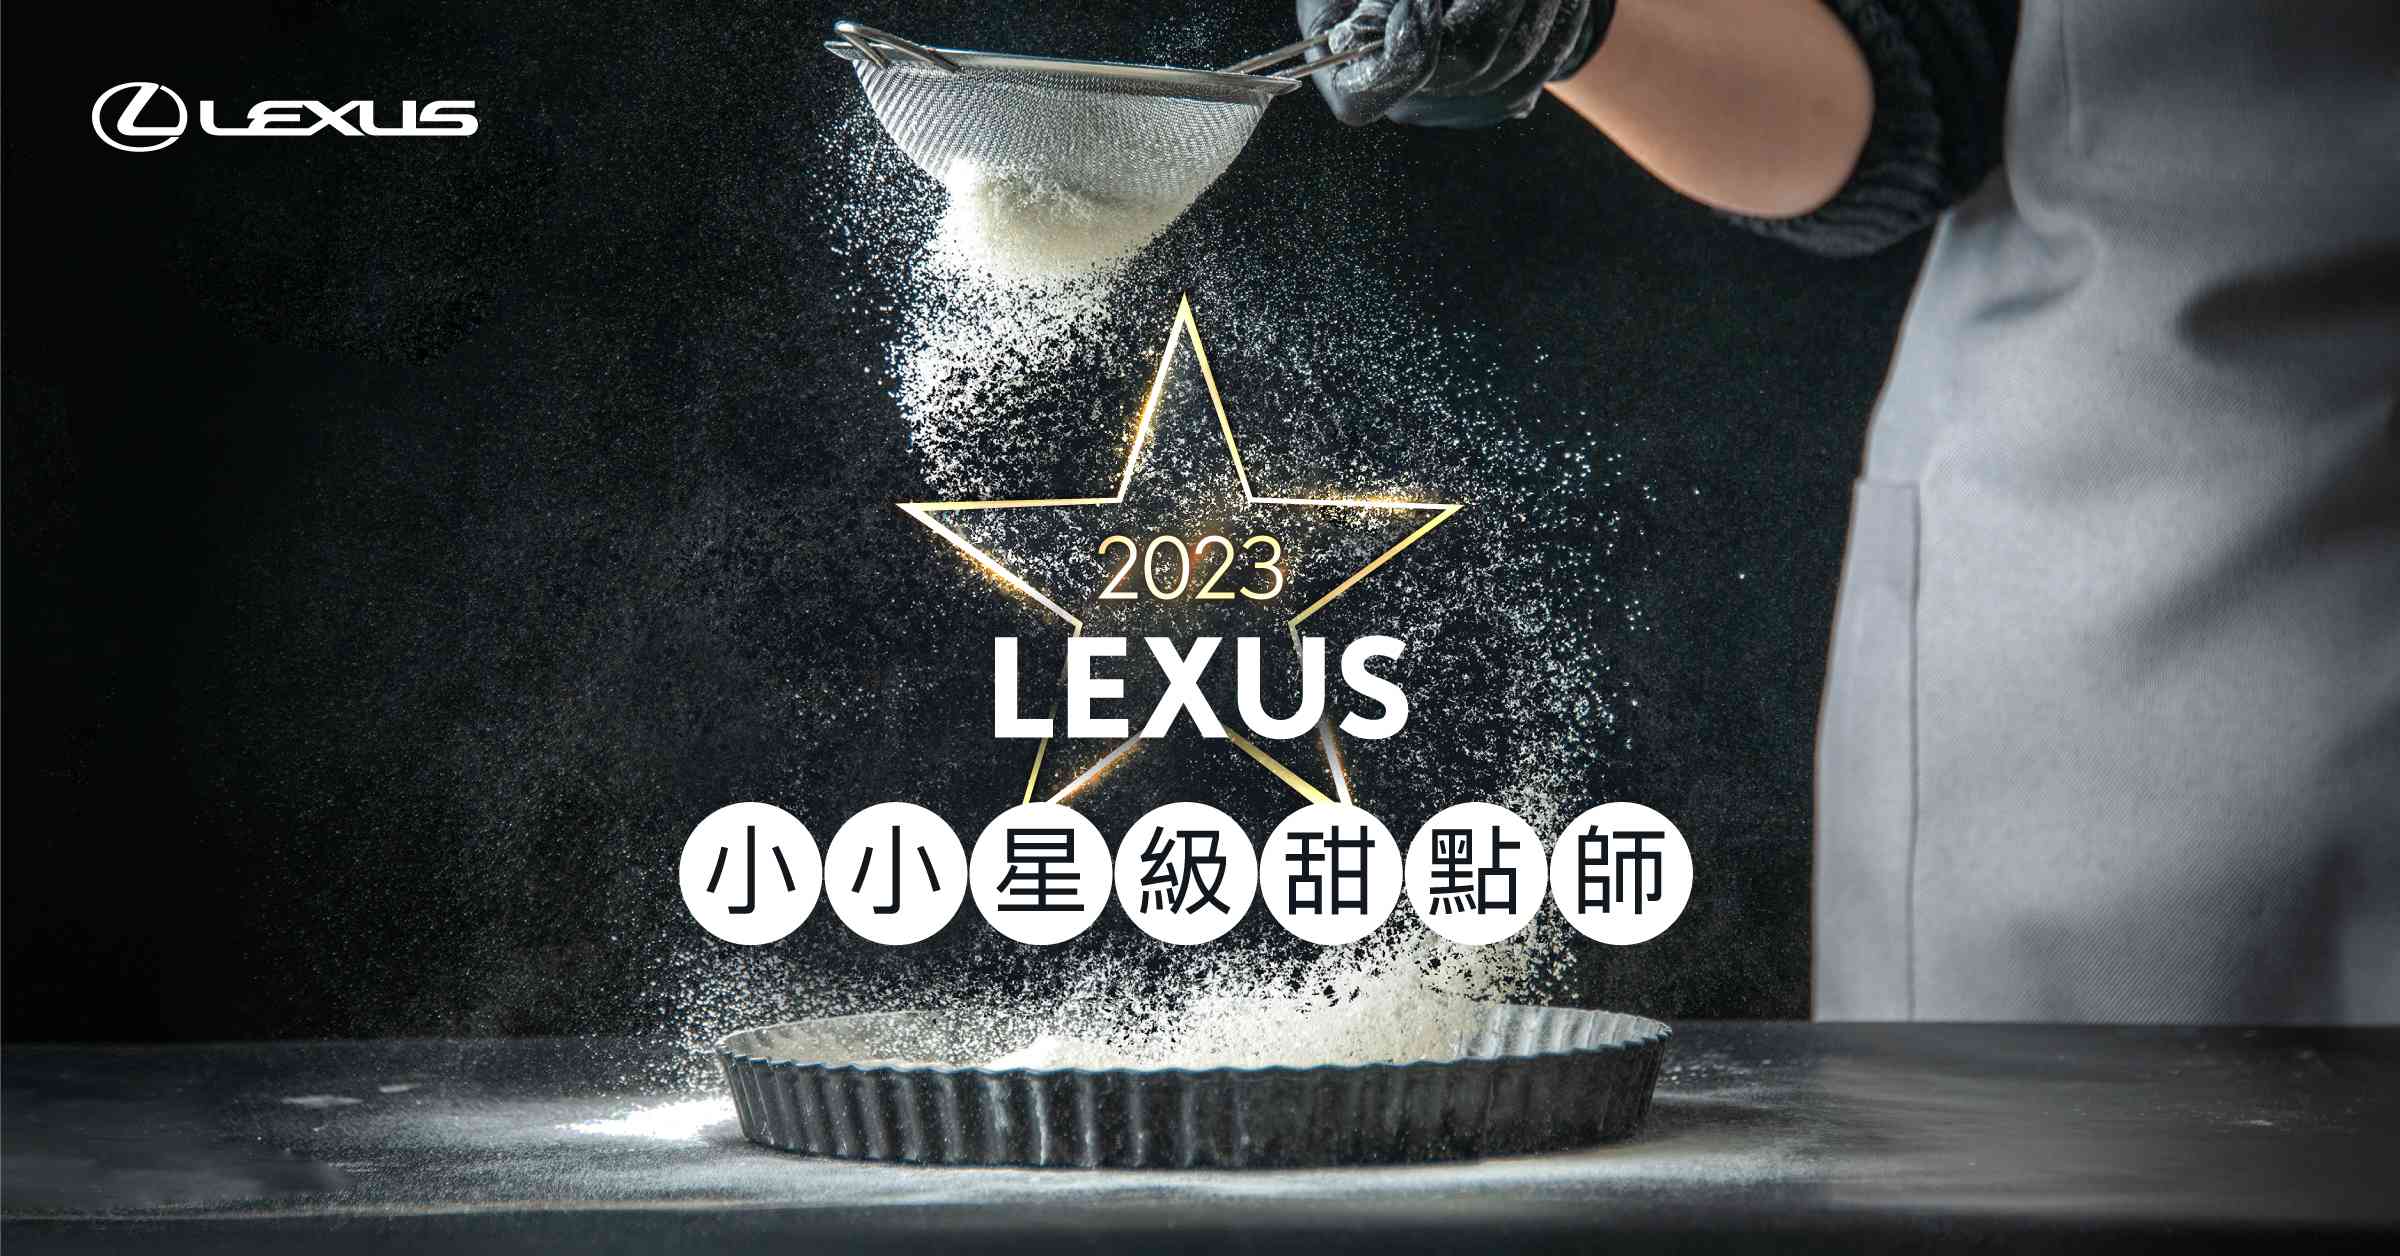 Lexus攜手星級甜點大師推出「小小星級甜點師」活動邀您一同享受舌尖上的奢華